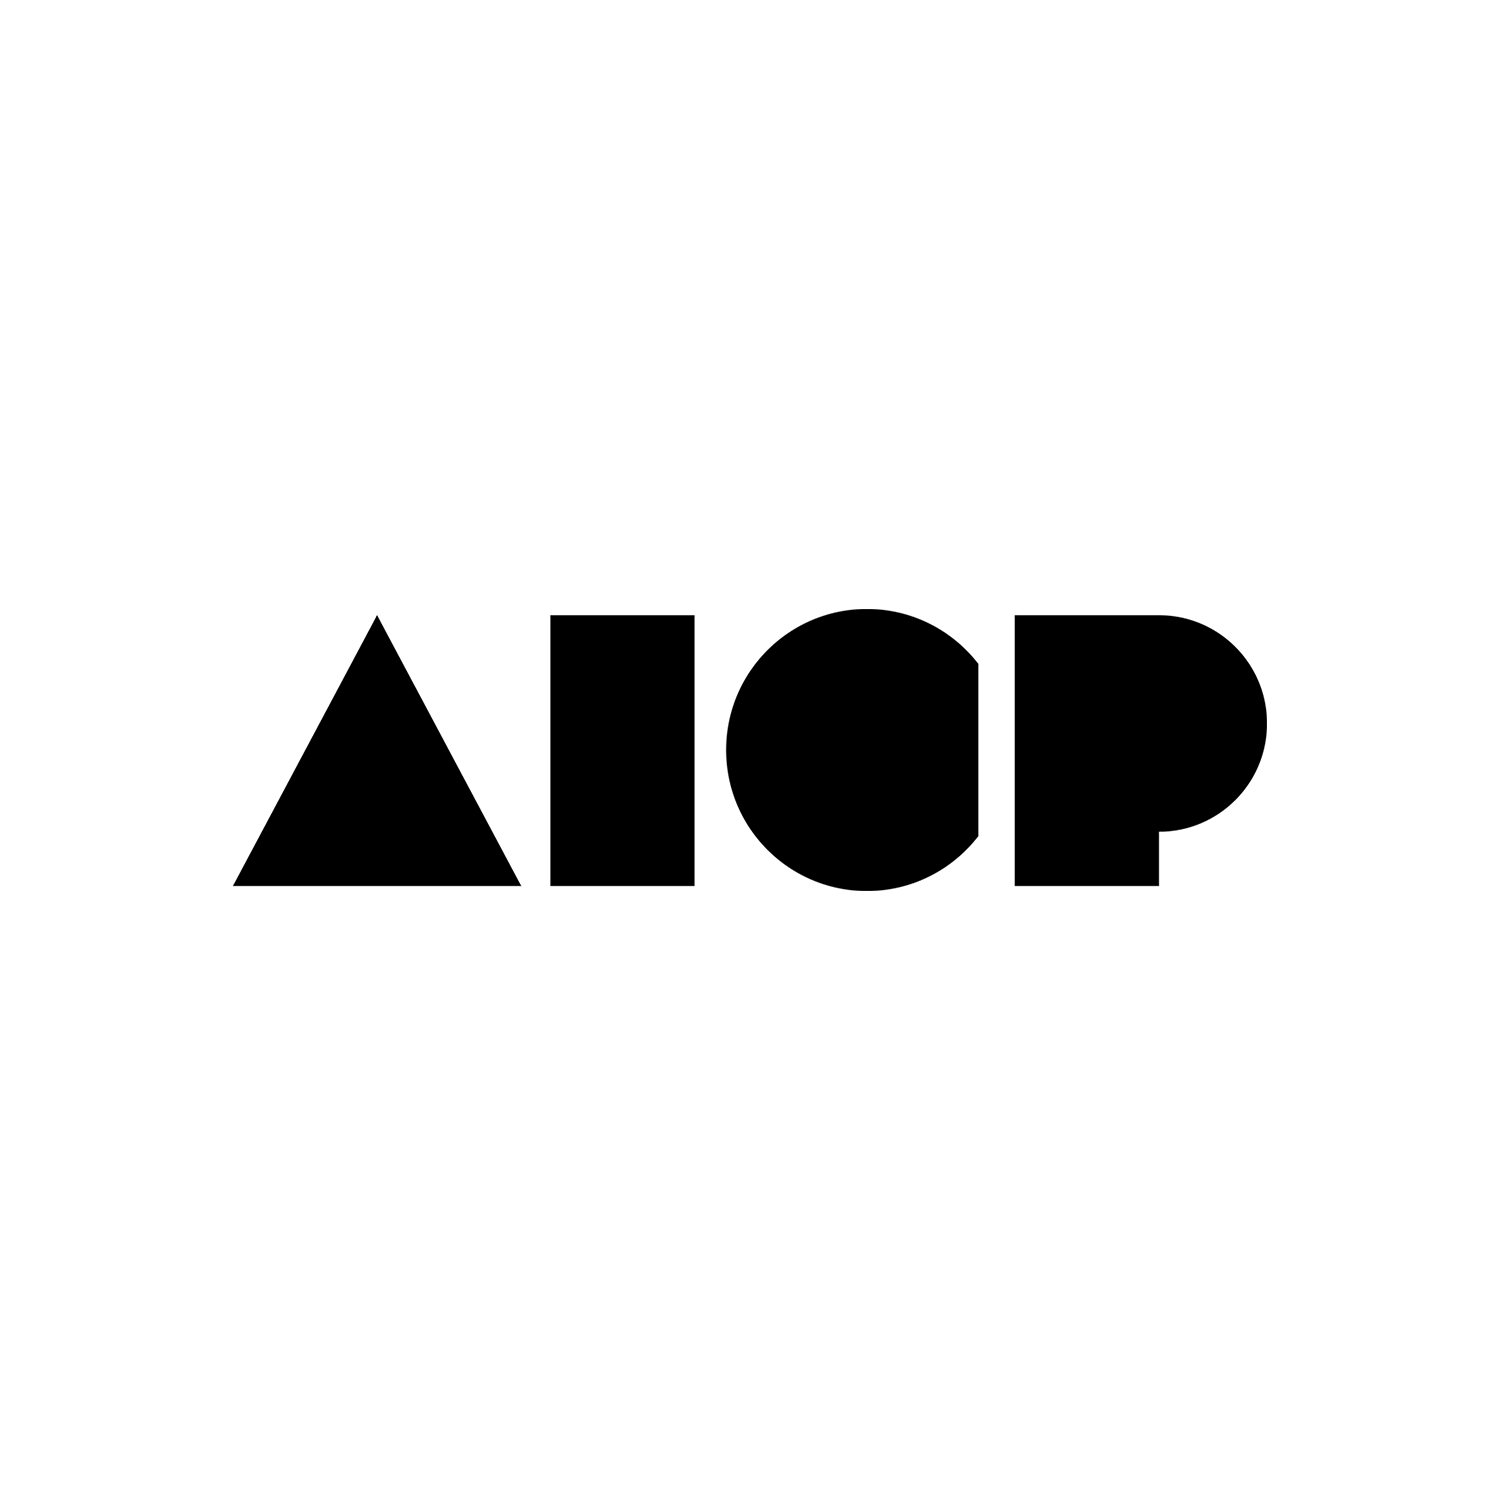 AICP Mentorship Program